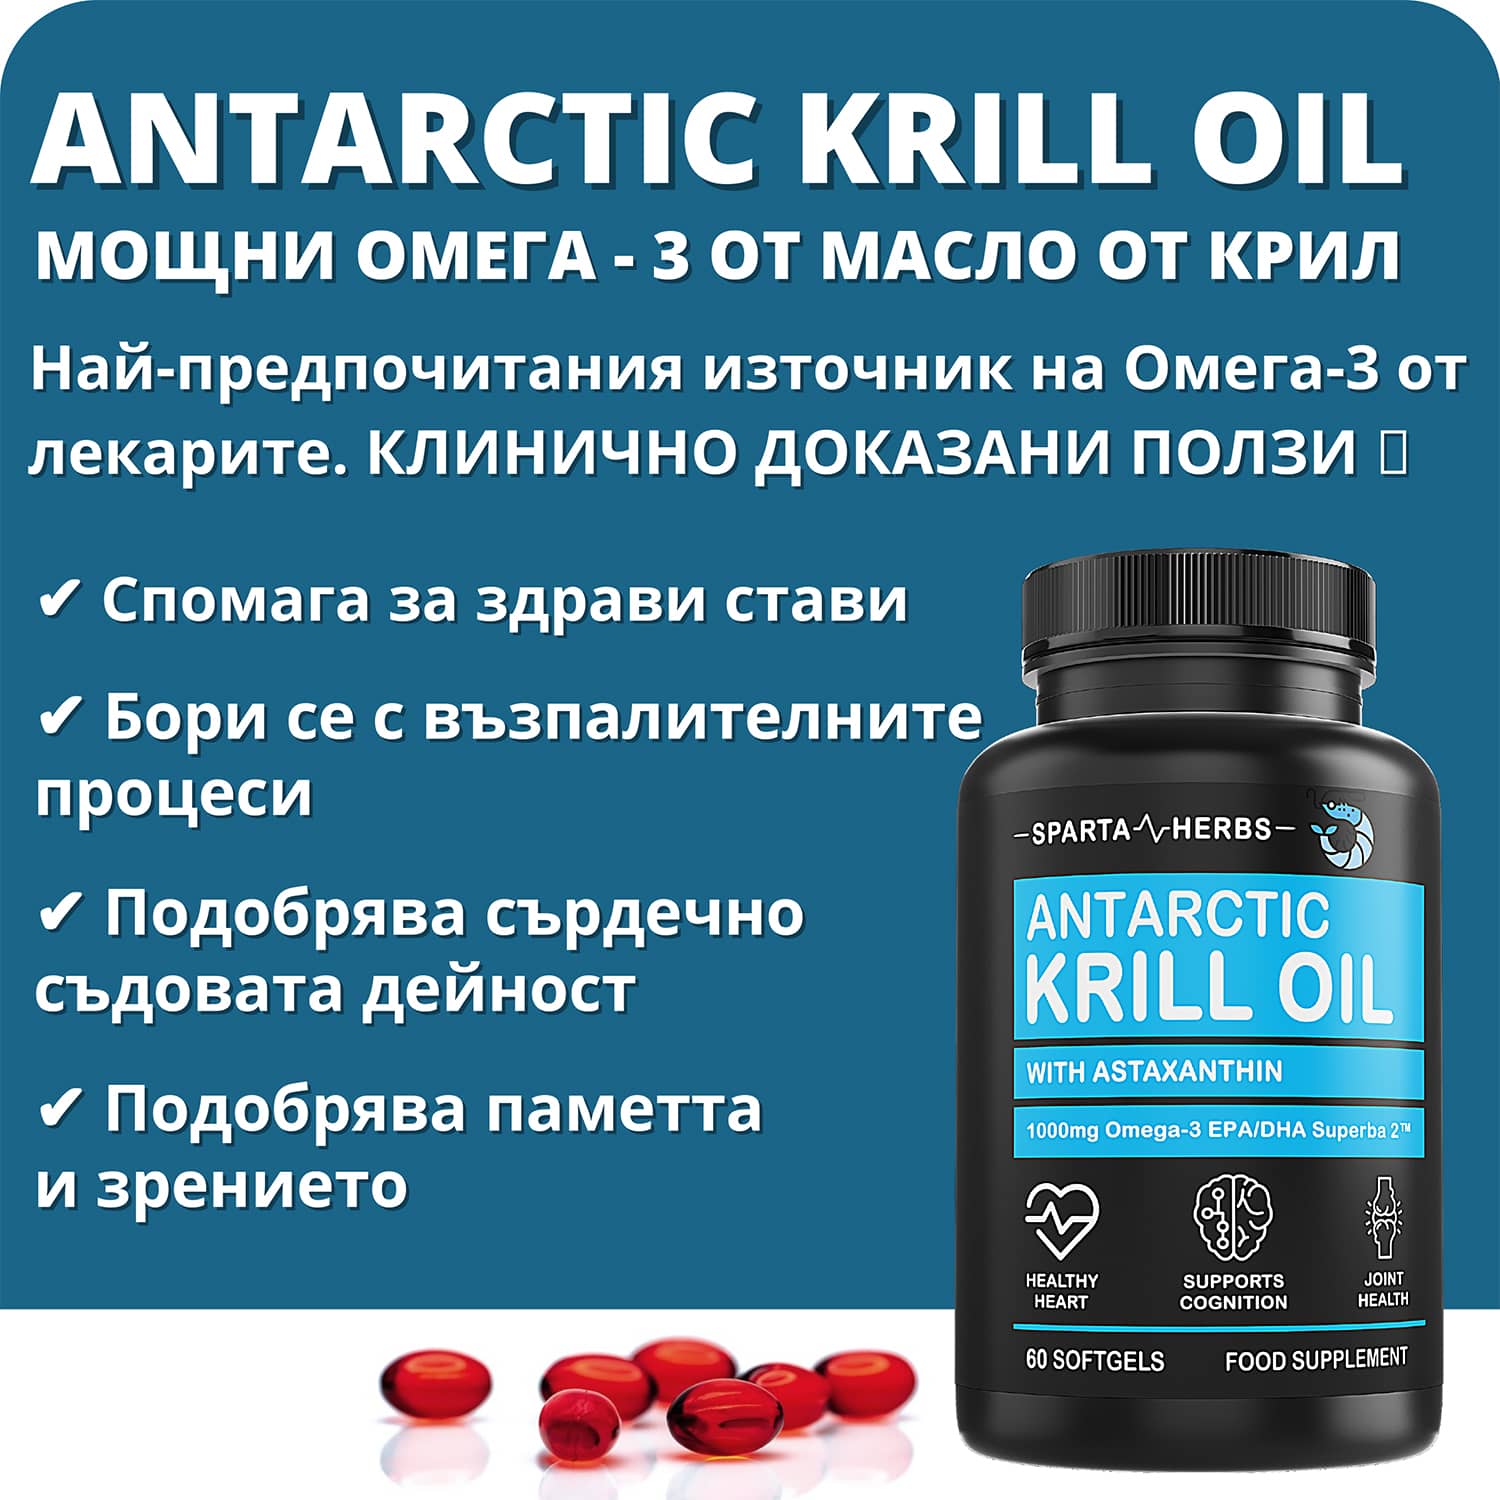 antarctic krill oil bannner article mobile - opt